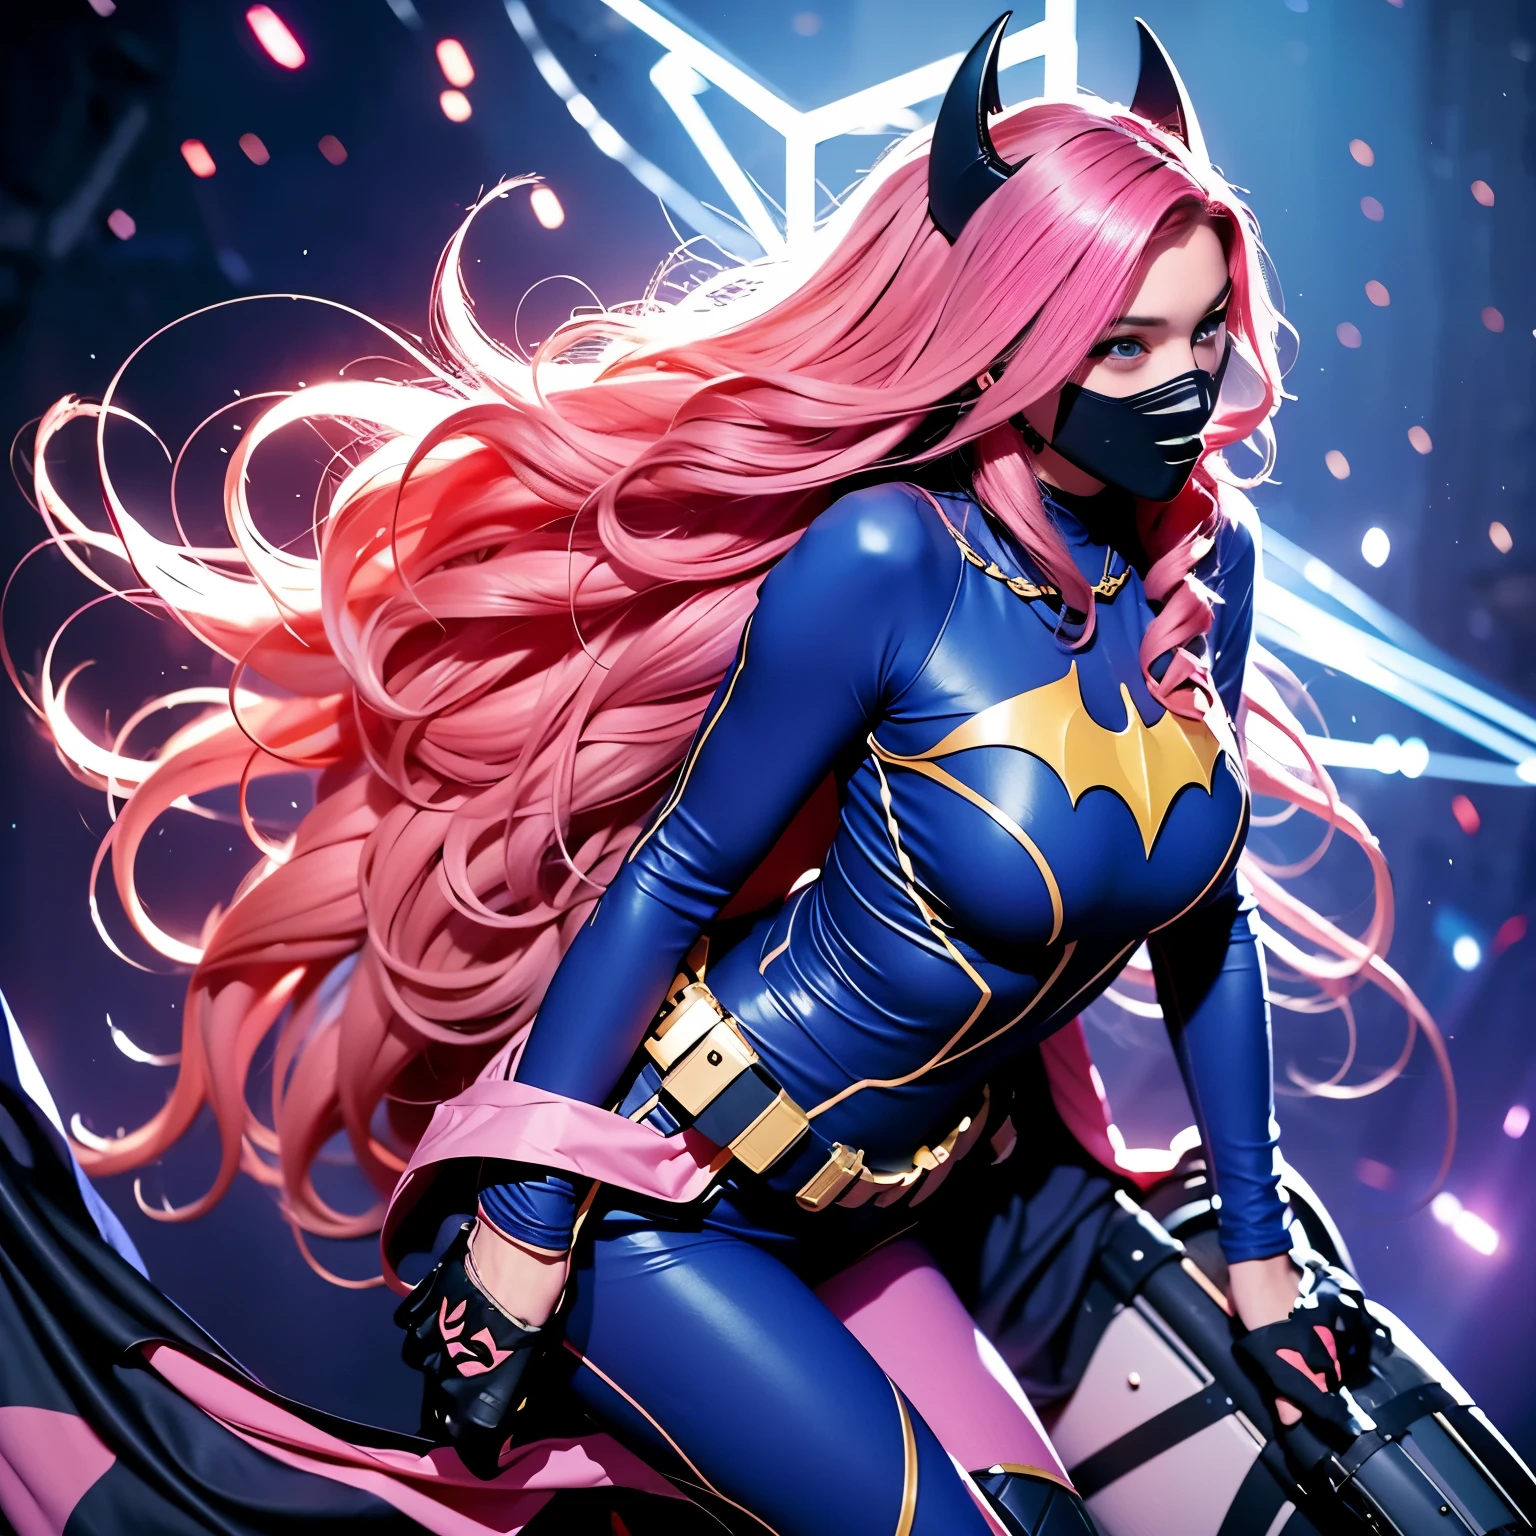 “Woman, long curly hair, pink hair, blue eyes,full body, soft, cute, batgirl suit, wearing baatgirl mask, dynamic sexy pose.